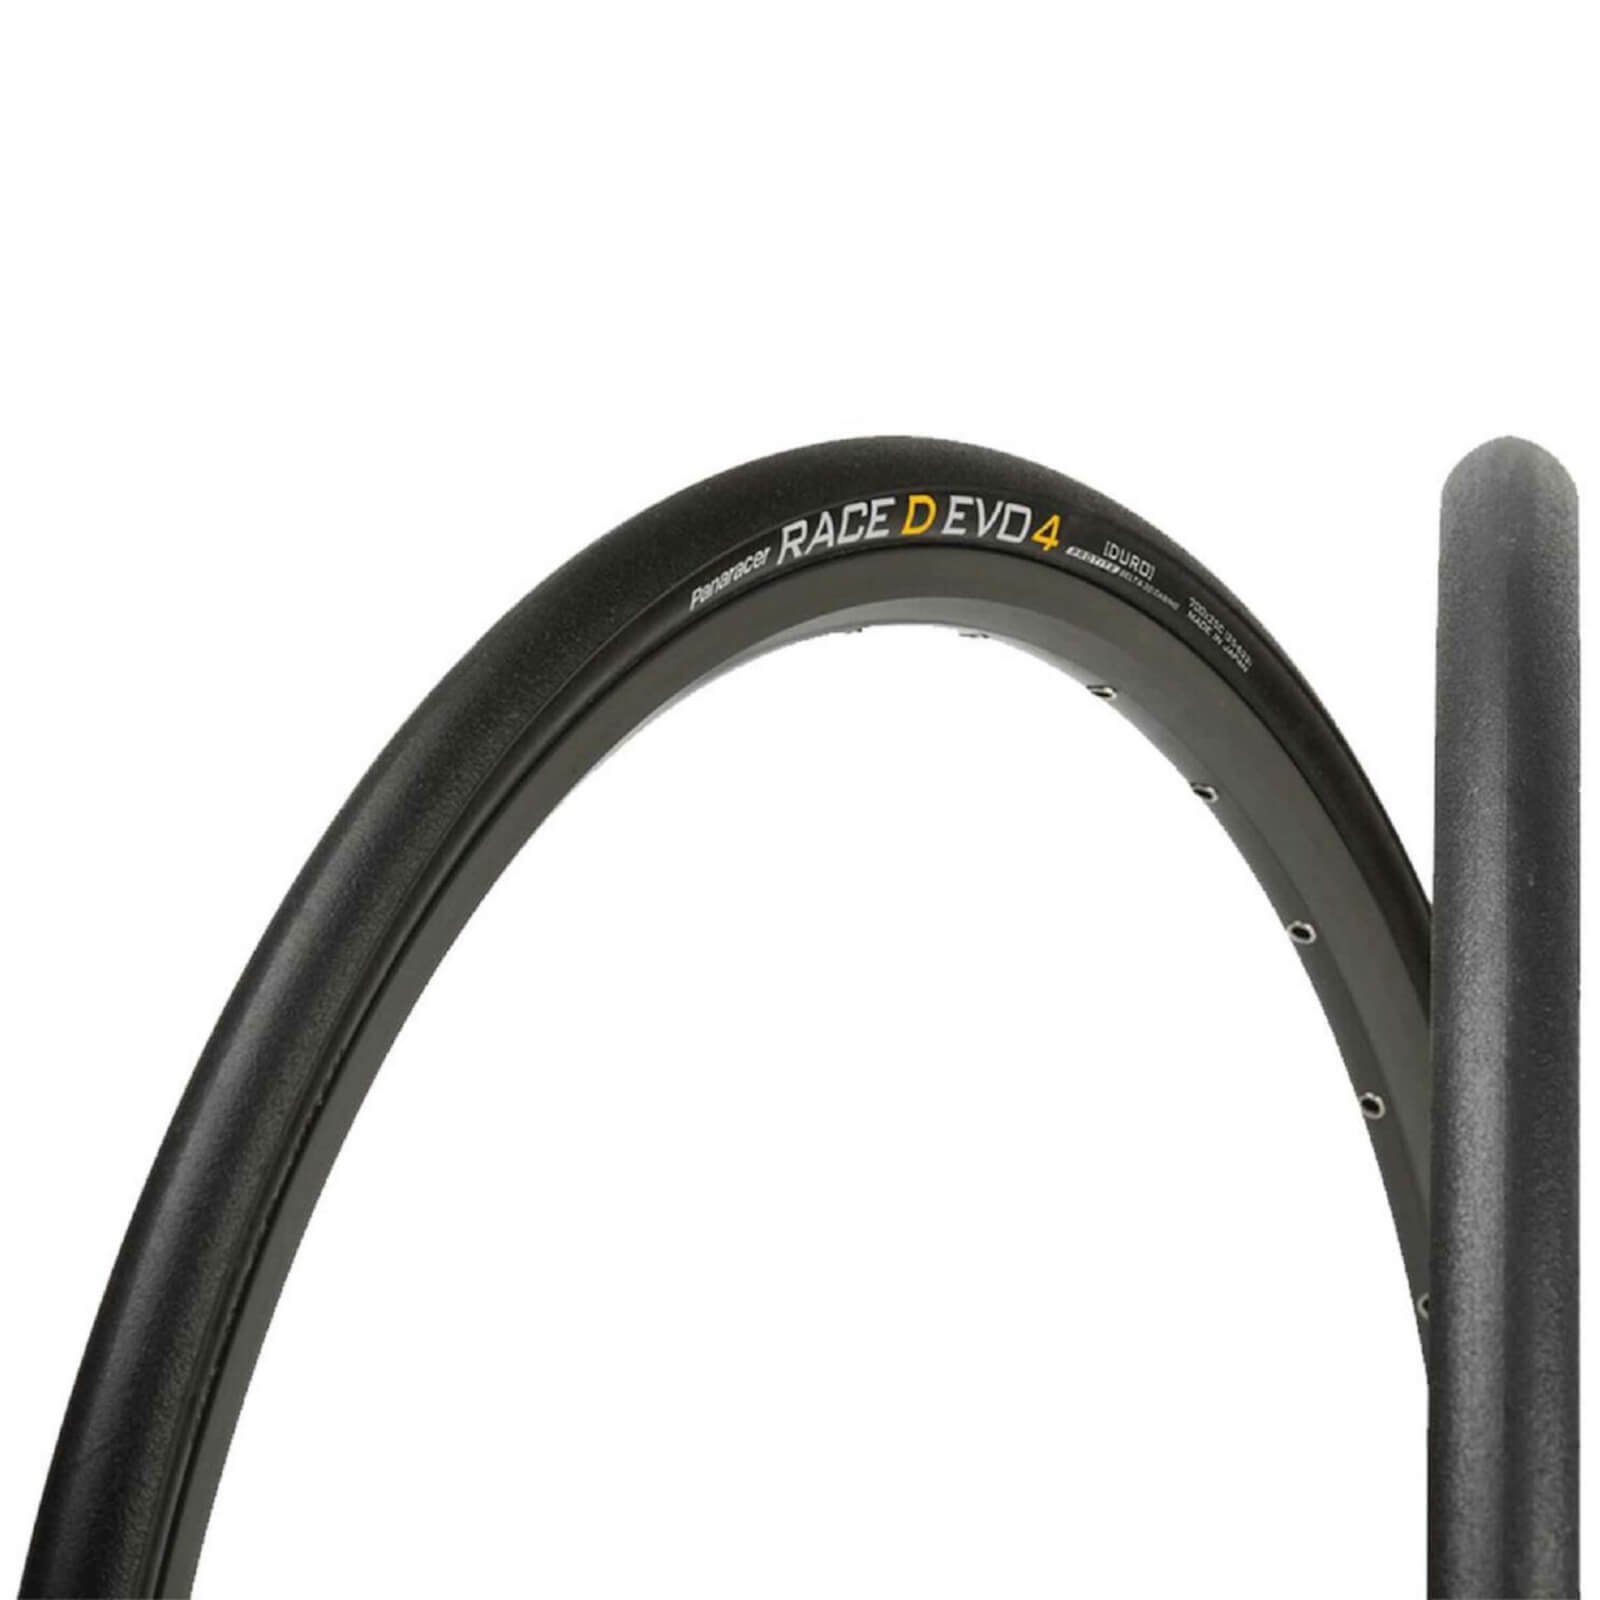 Panaracer Race D Evo 4 Folding Road Tire - 700 x 25C - black/brown